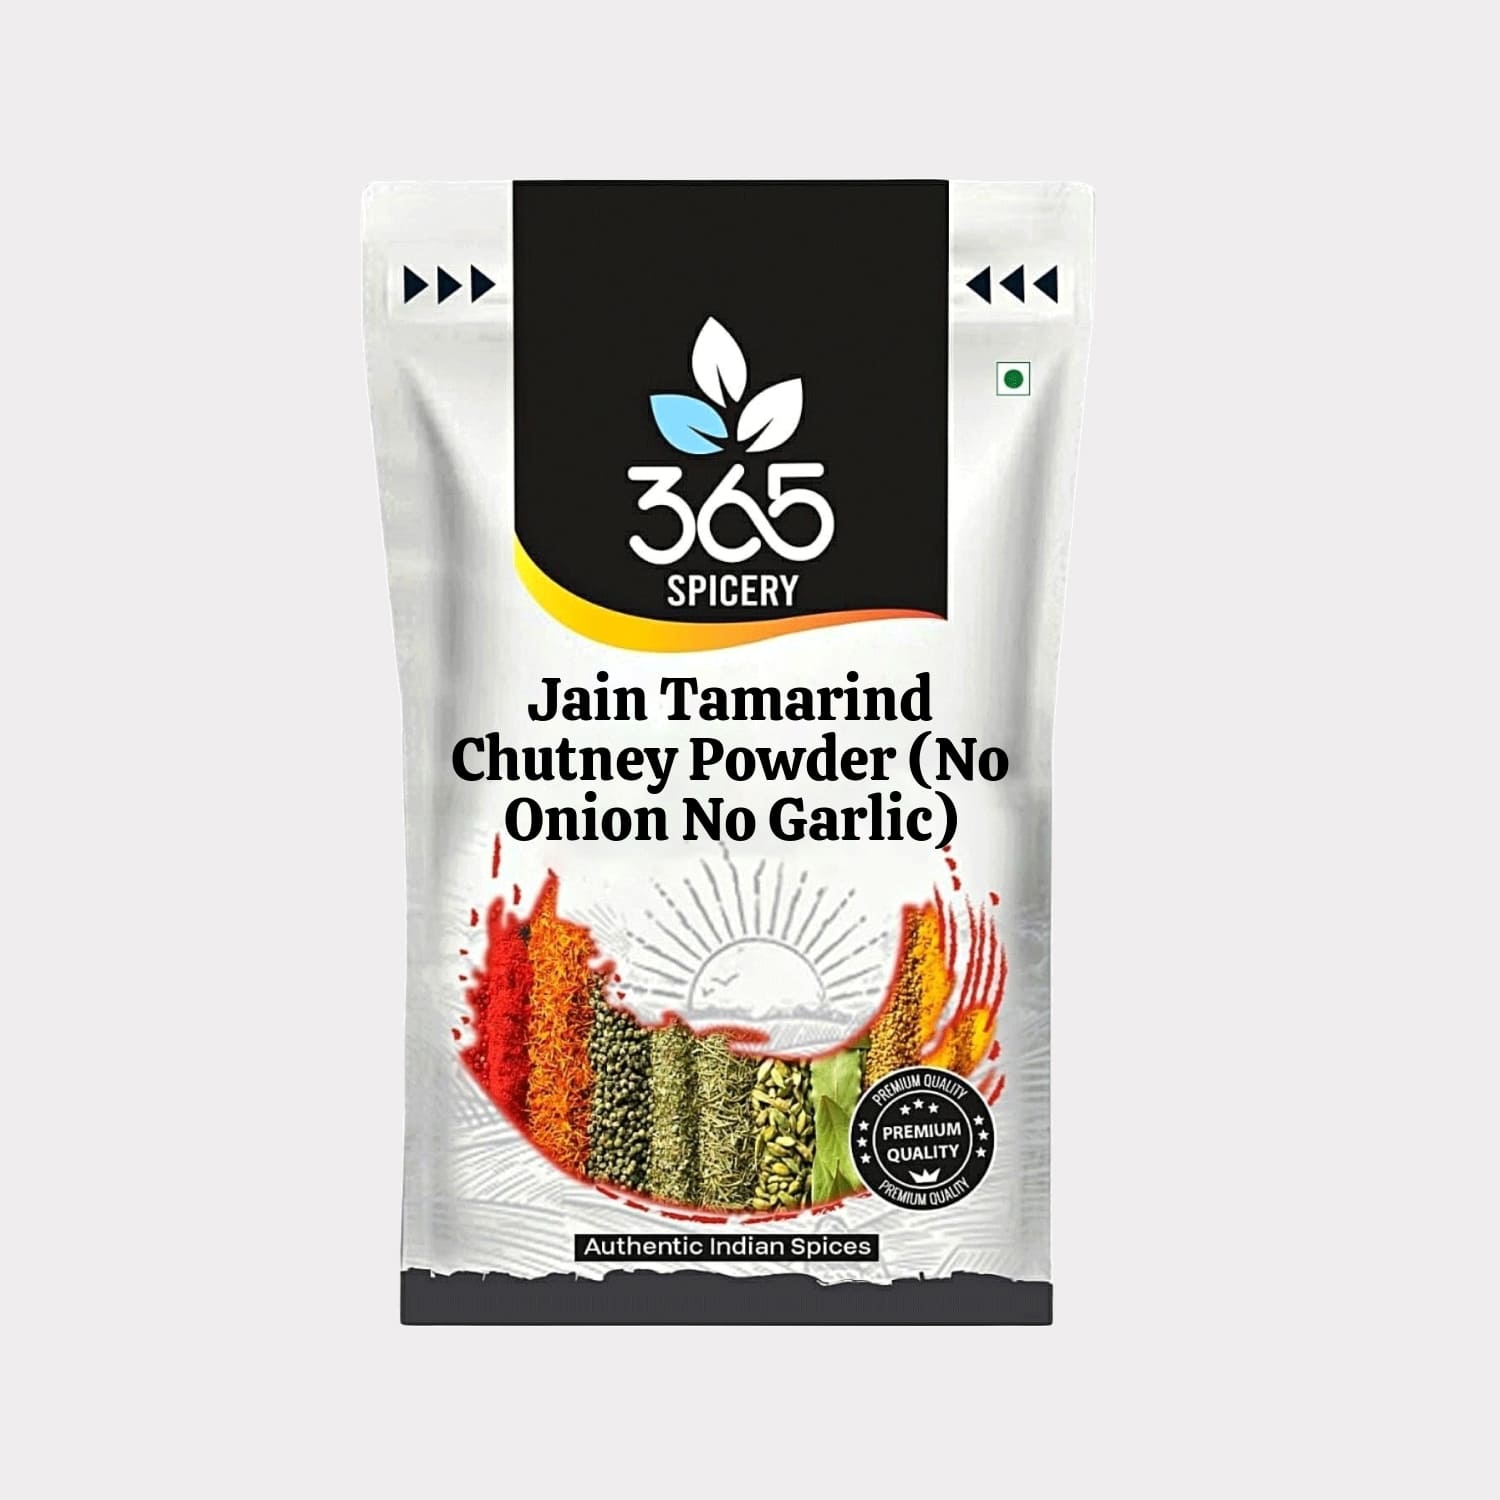 Jain Tamarind Chutney Powder (No Onion No Garlic)